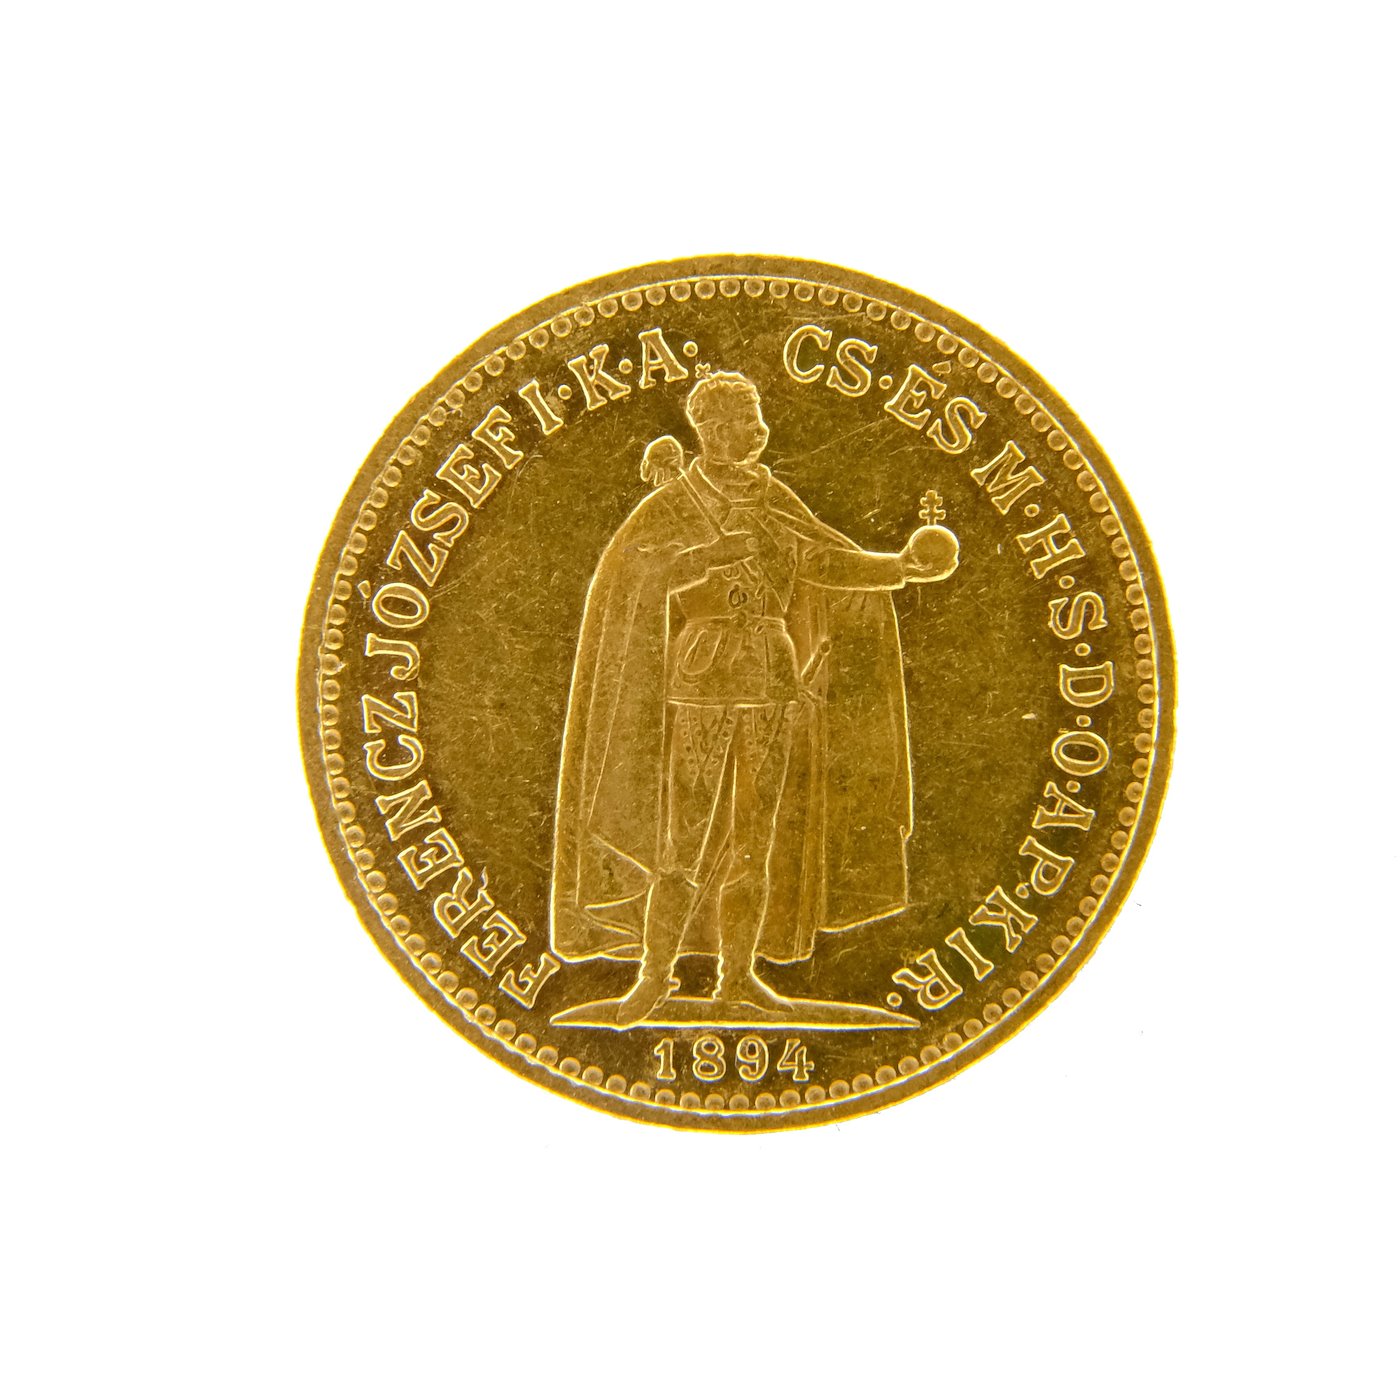 .. - Rakousko Uhersko zlatá 10 Koruna 1894 K.B. uherská, zlato 900/1000, hrubá hmotnost 3,387g